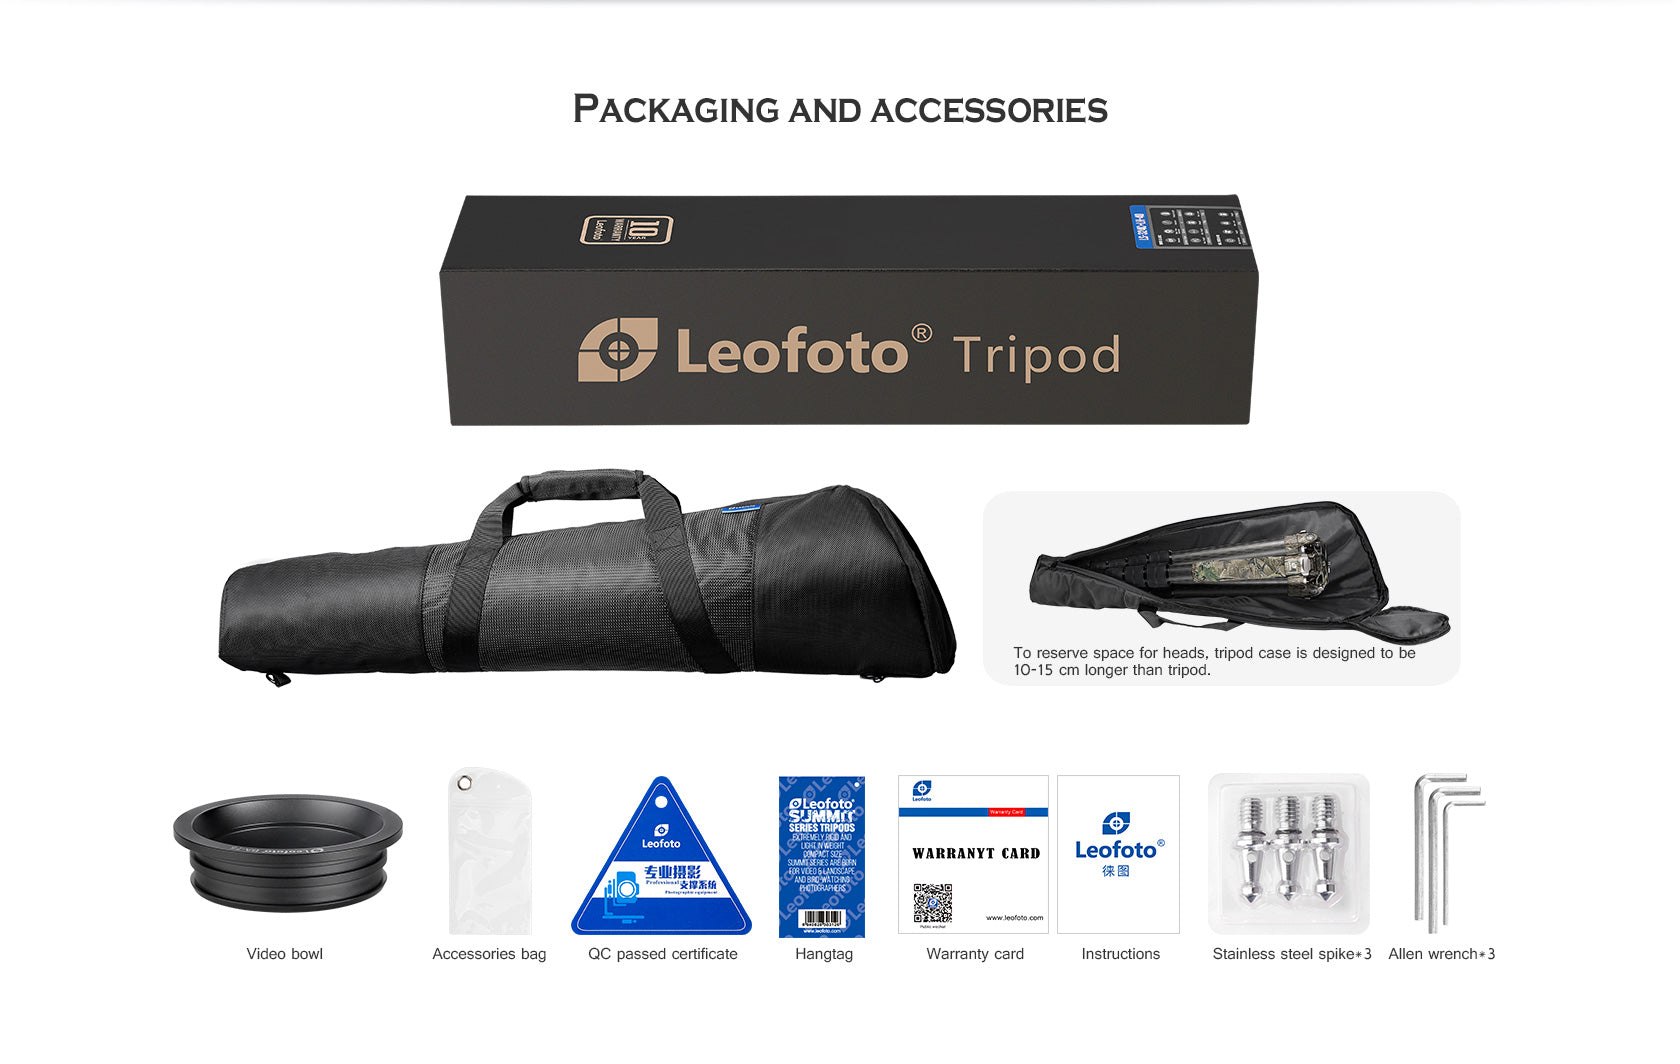 Leofoto LM-365C (Camo) Tripod with 75mm Video Bowl+Platform and Bag